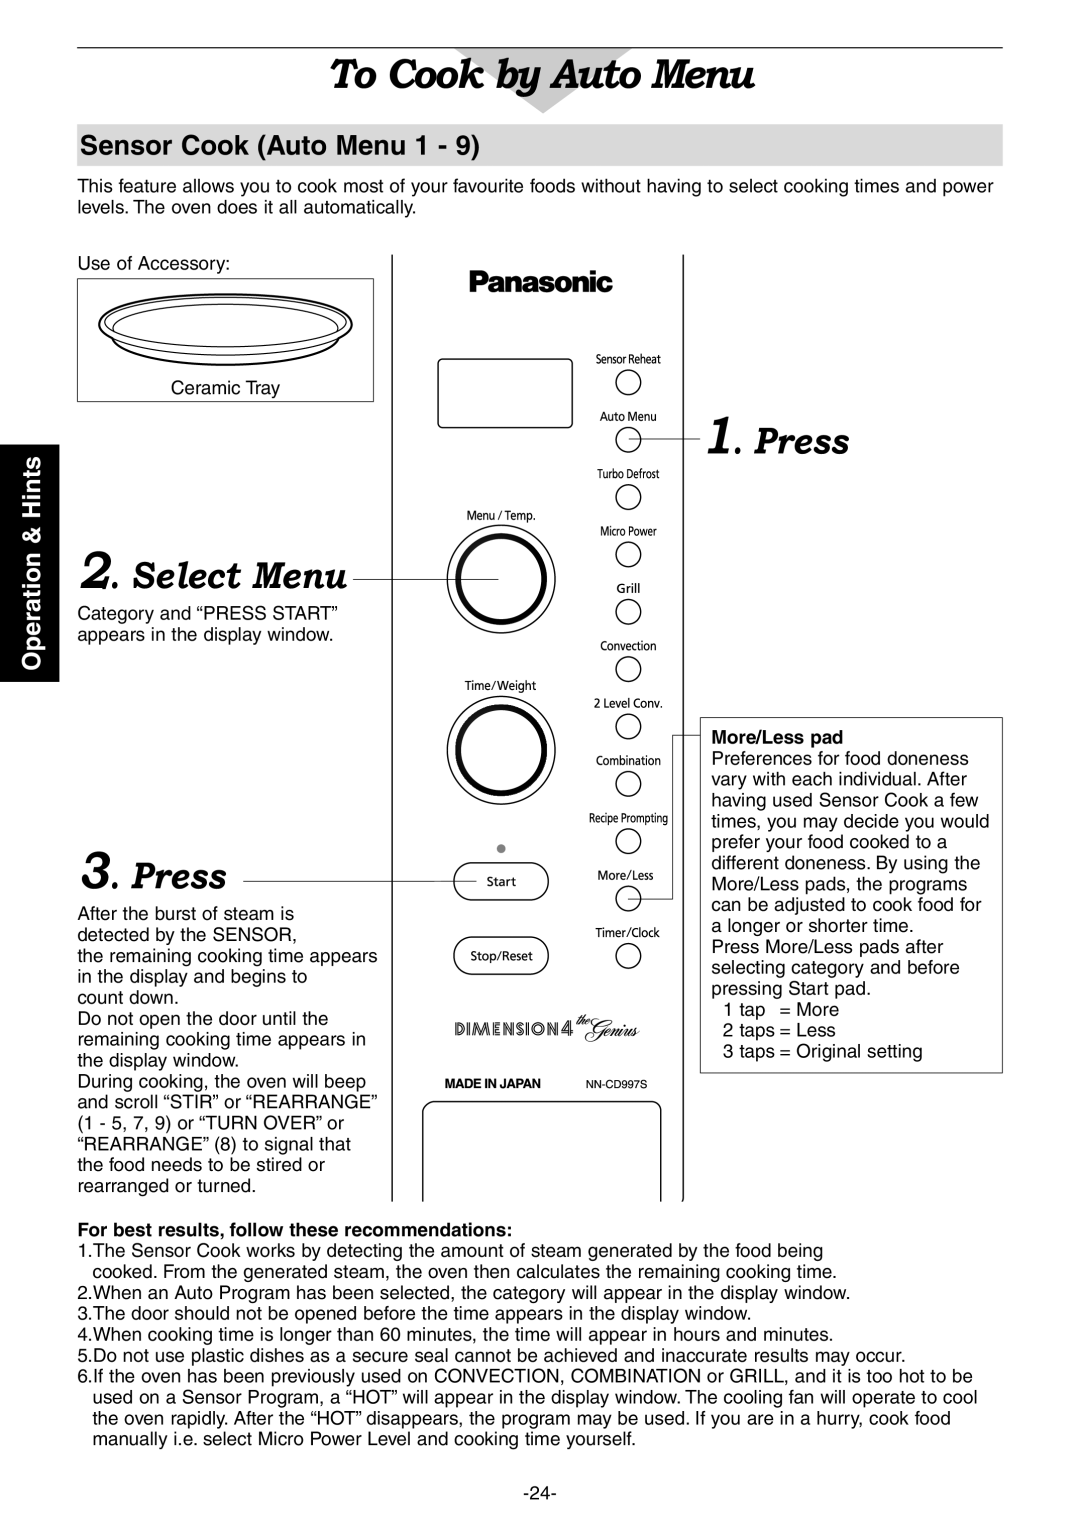 Panasonic NN-CD987W, NN-CD997S To Cook by Auto Menu, Select Menu, Sensor Cook Auto Menu, Press, Operation & Hints 